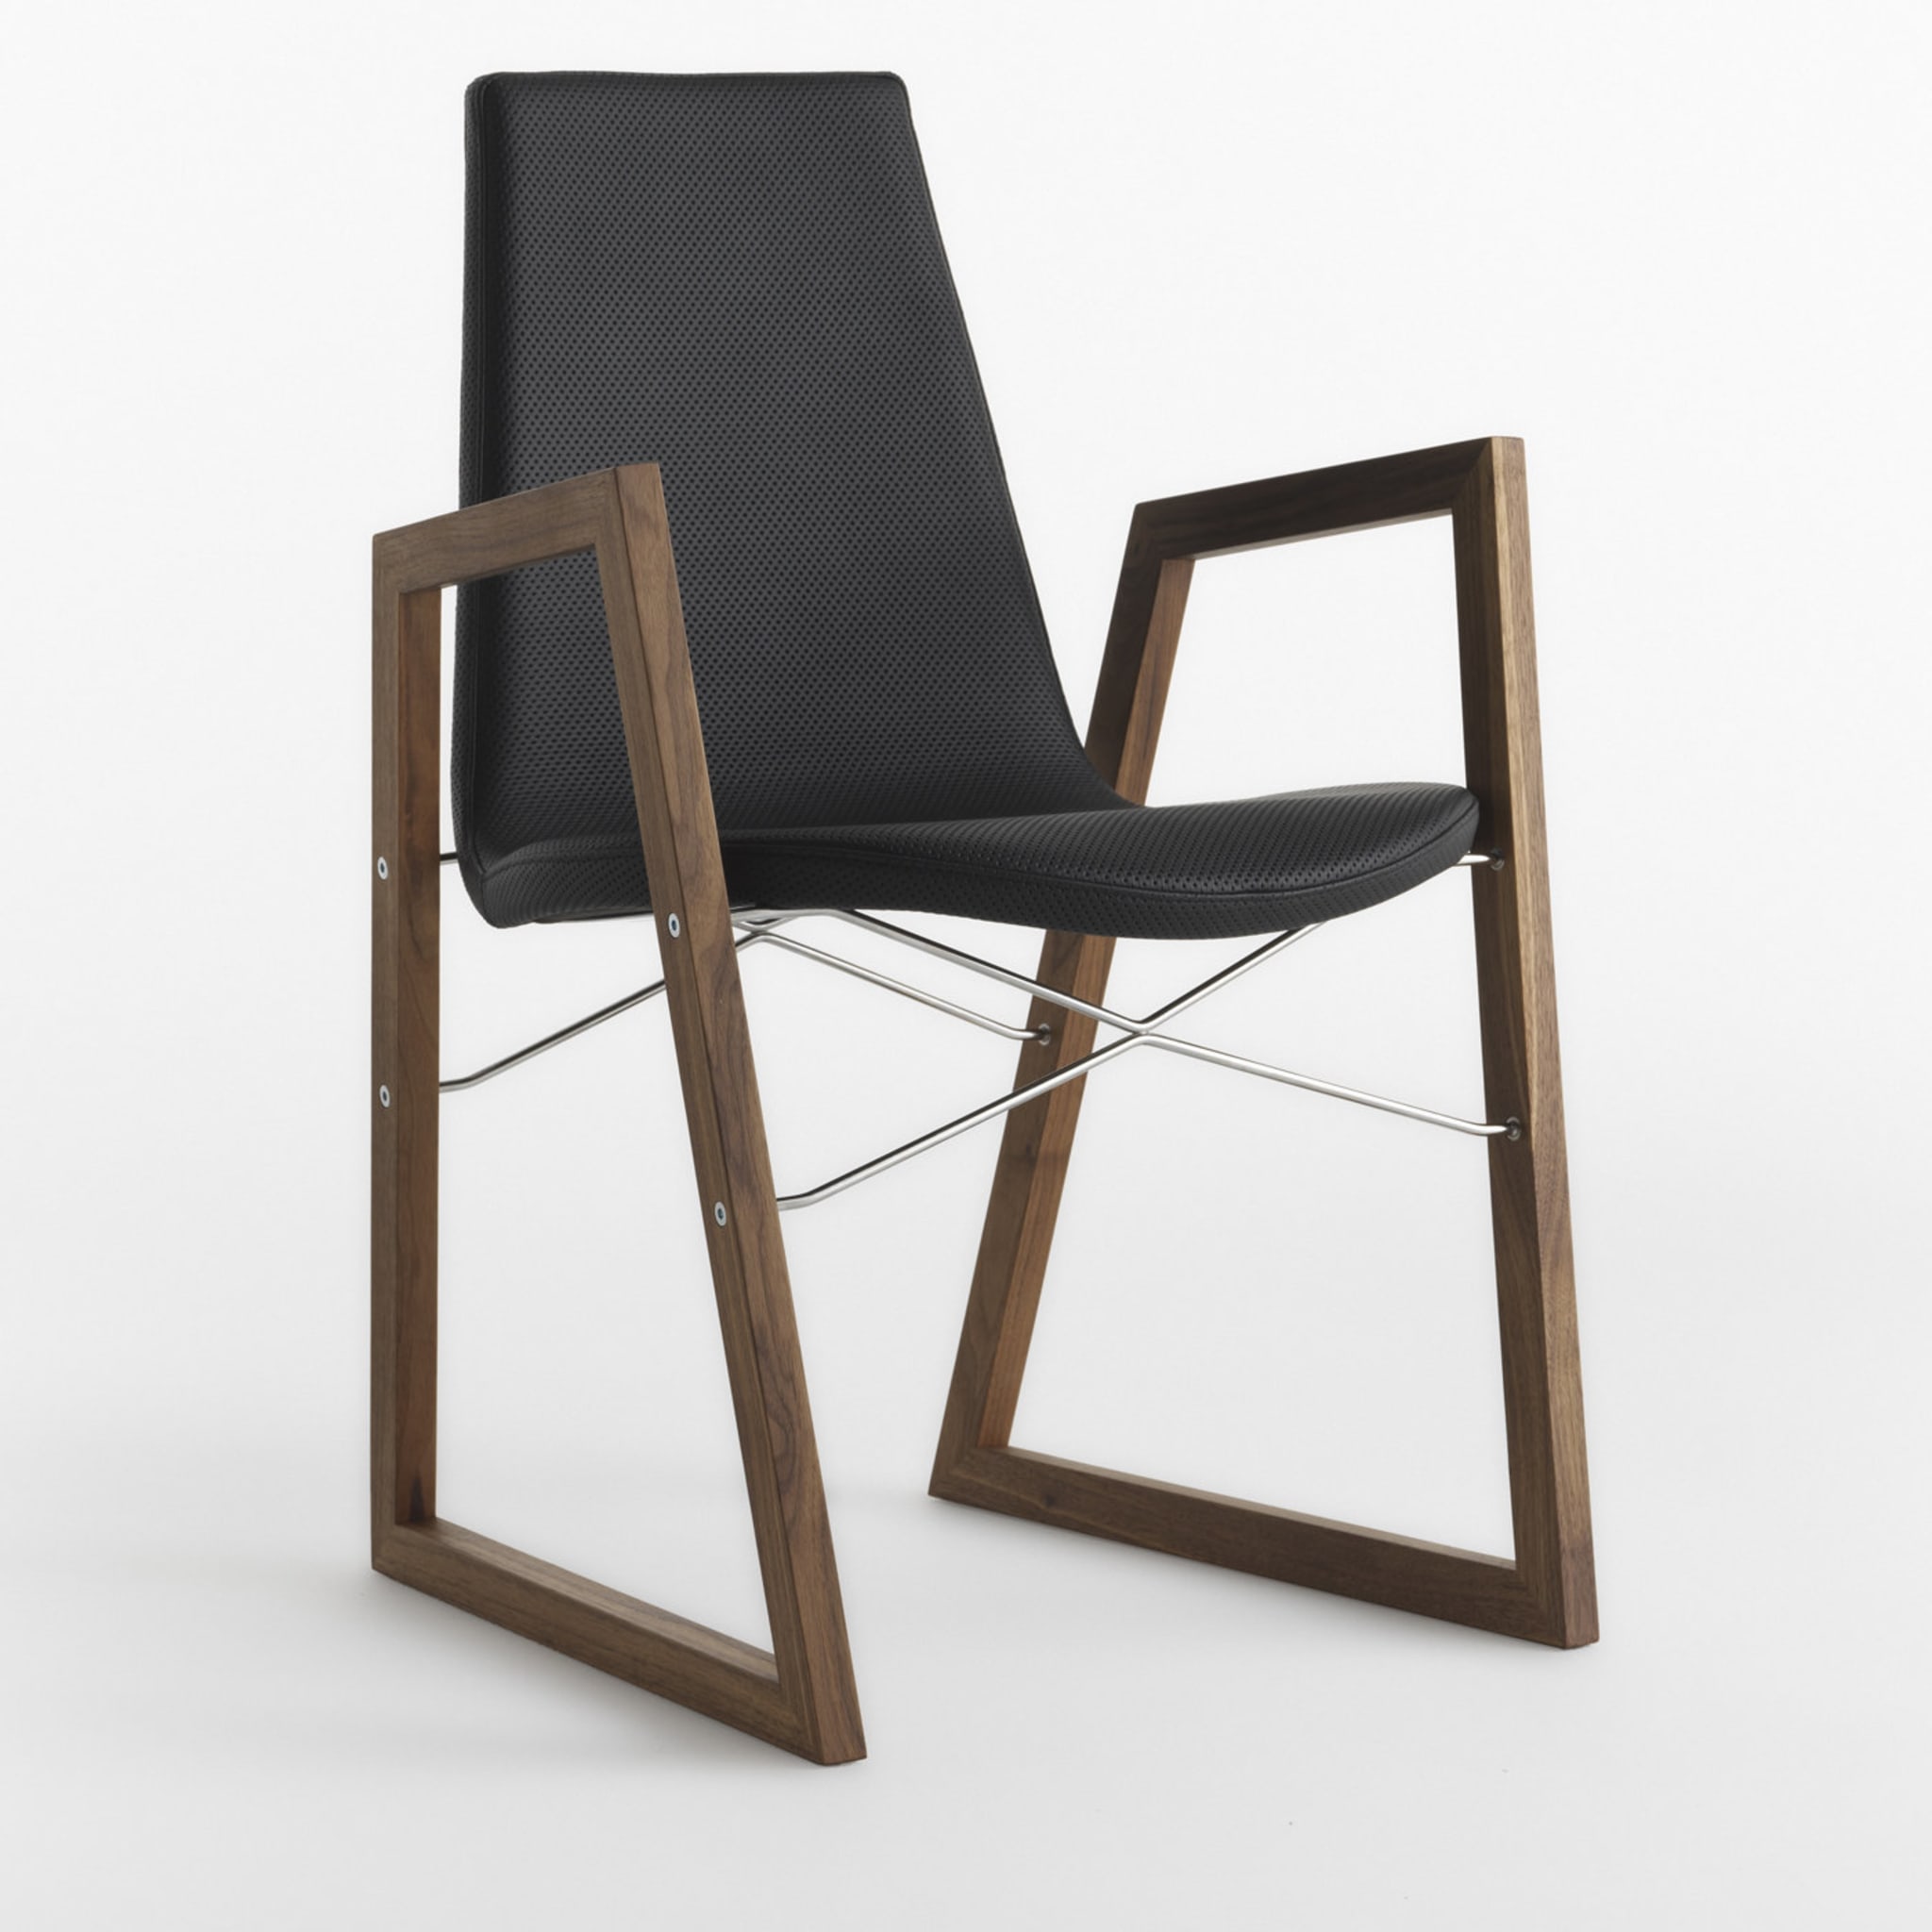 Ray Black Chair by Orlandini Design - Alternative view 1